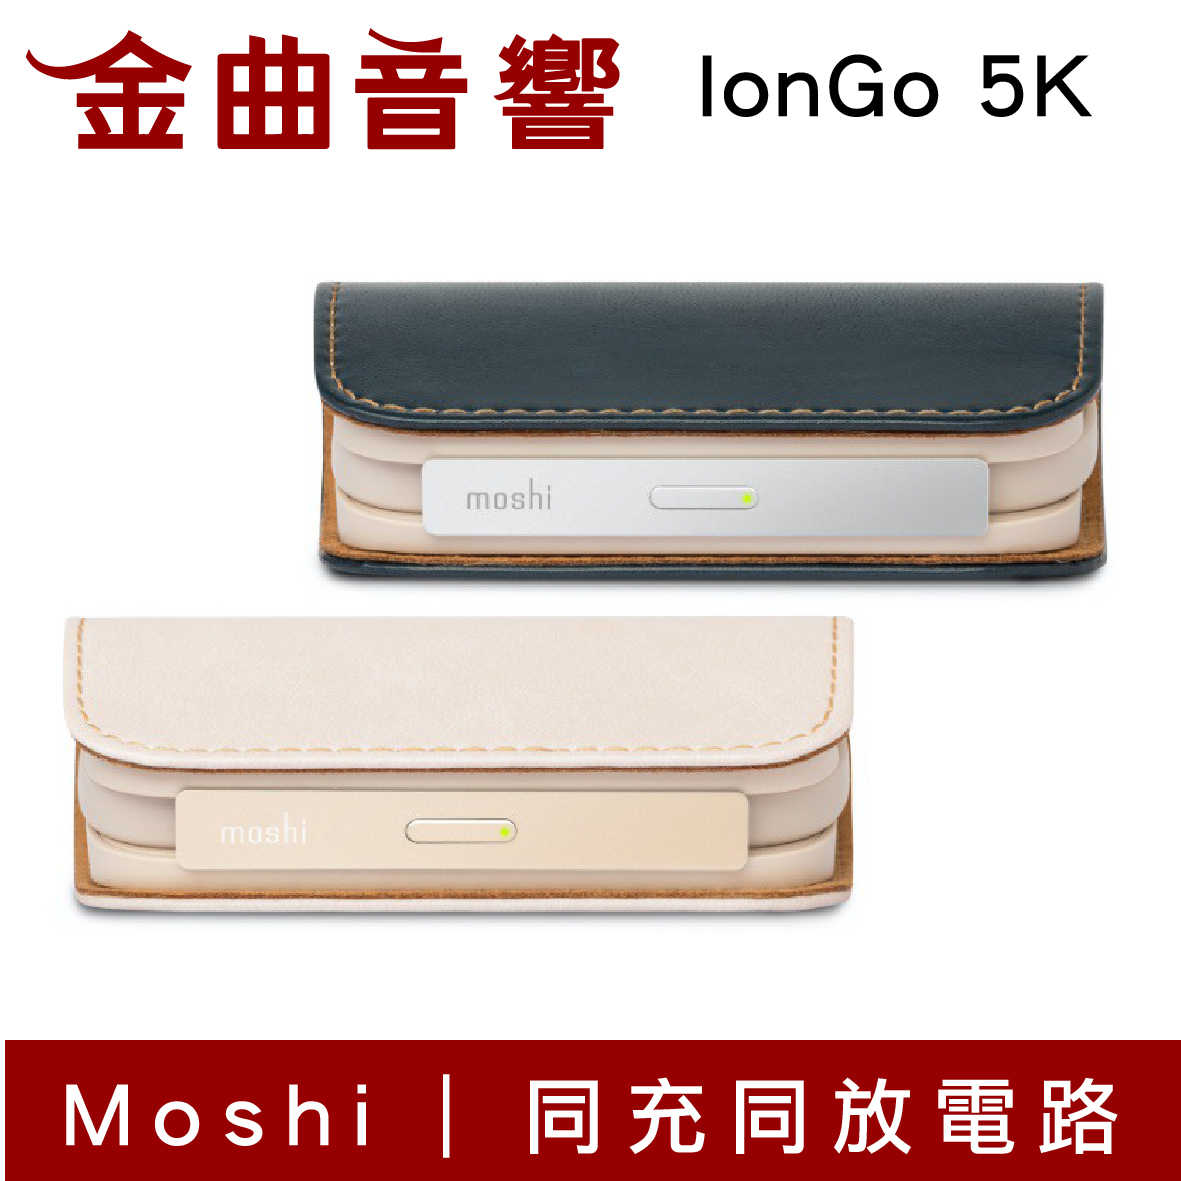 Moshi IonGo 5K 帶線行動電源 (USB 及 Lightning，iPhone 充電專用) | 金曲音響